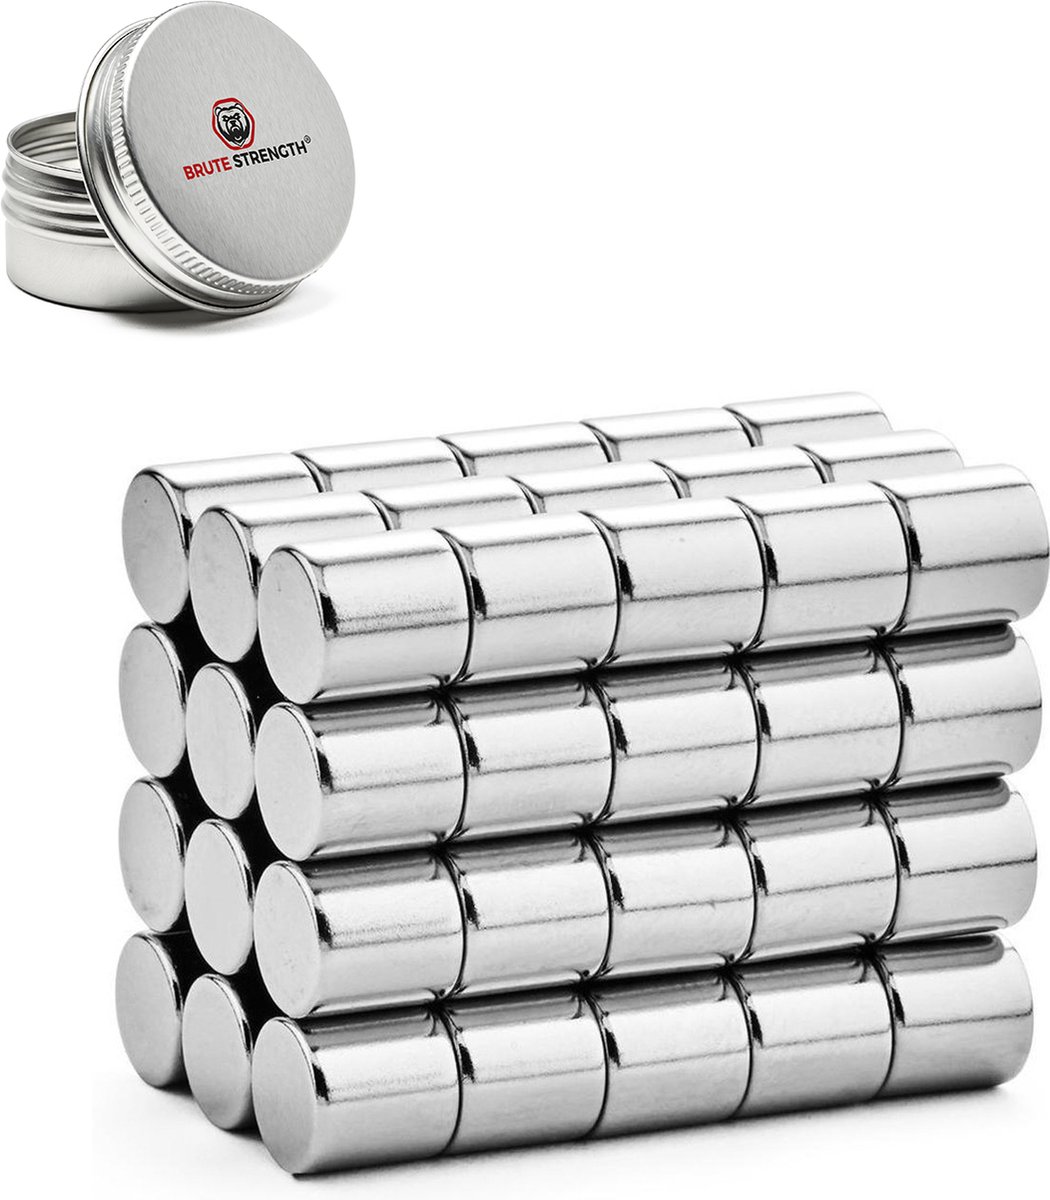 Brute Strength - Super sterke magneten - Rond - 10 x 10 mm - 60 stuks - Neodymium magneet sterk - Neodymium magneet sterk - Voor koelkast - whiteboard - Brute Strength